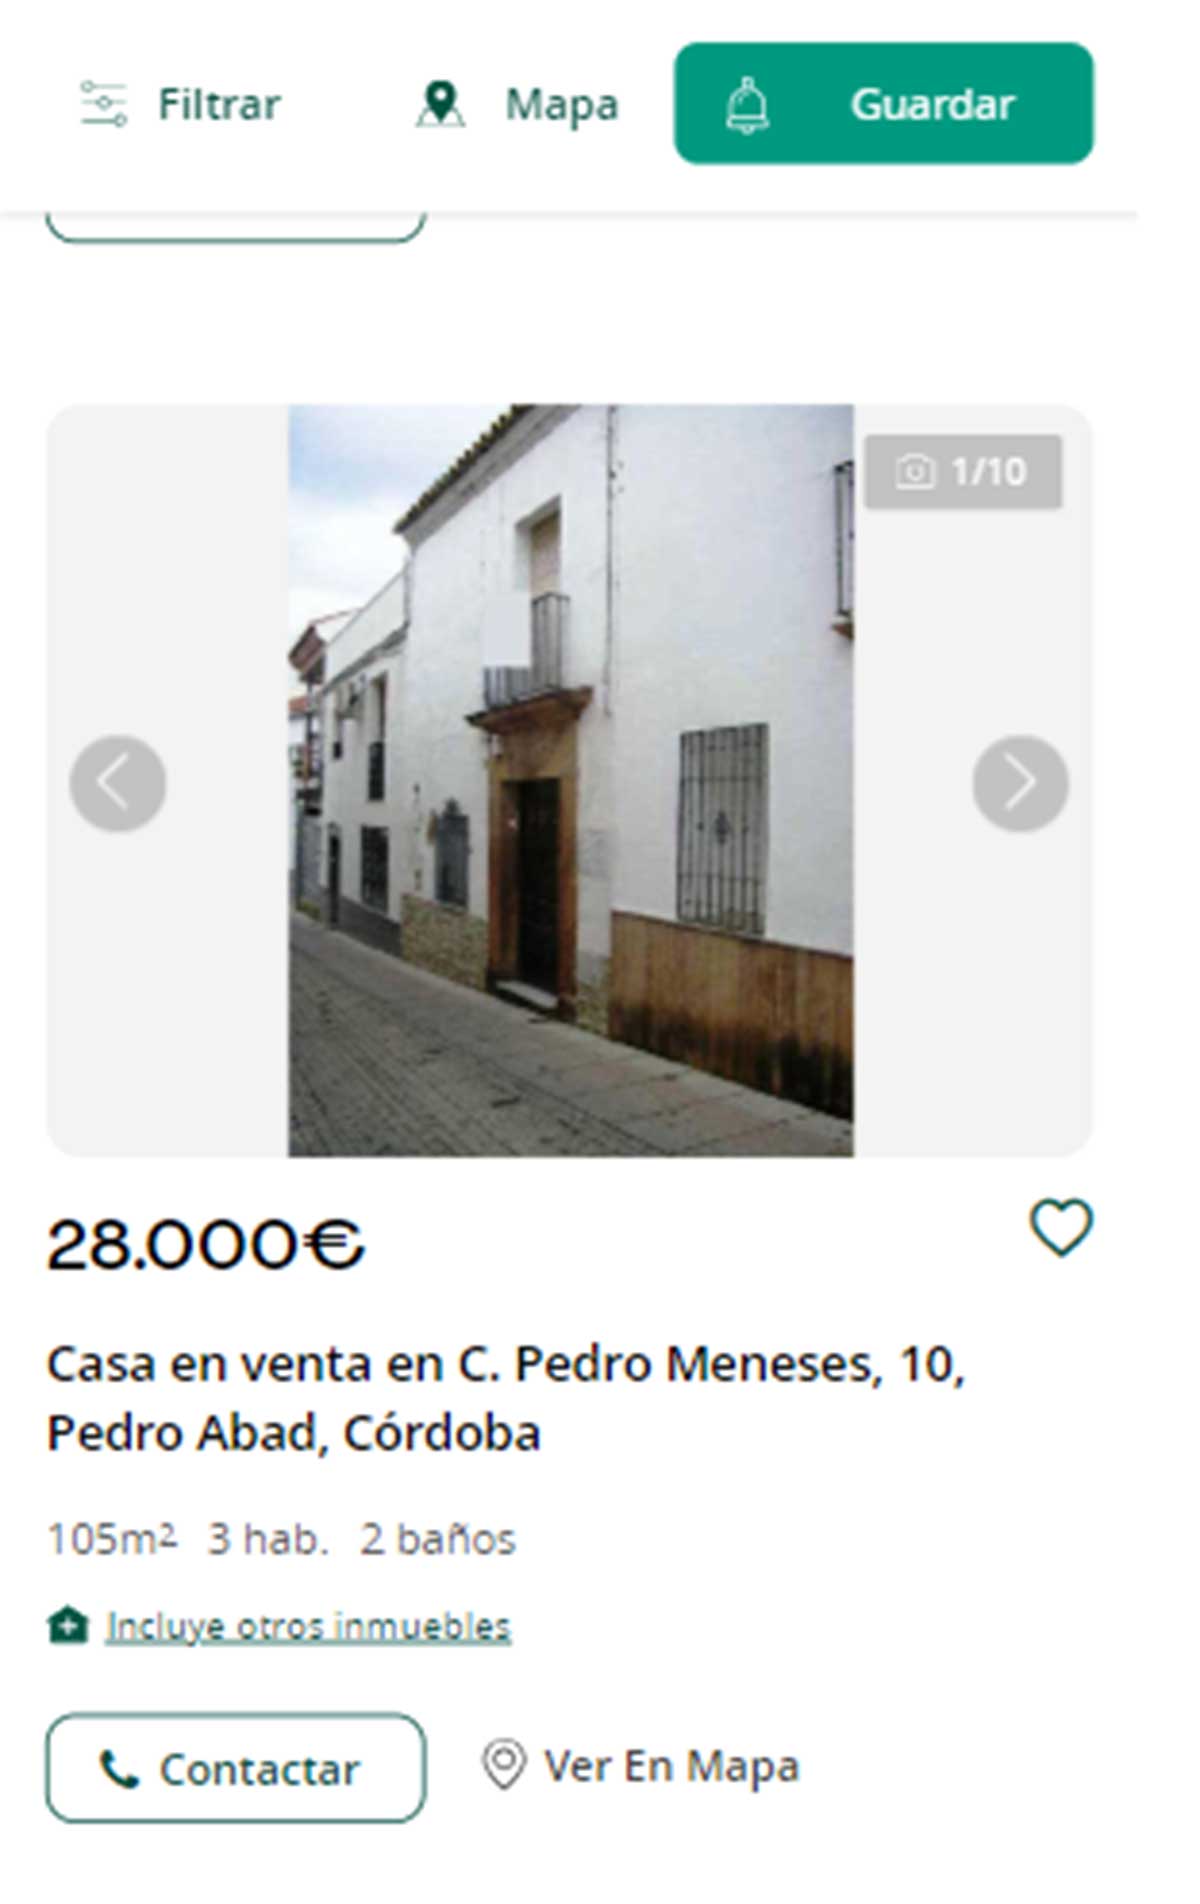 Piso a la venta en Córdoba por 28.000 euros